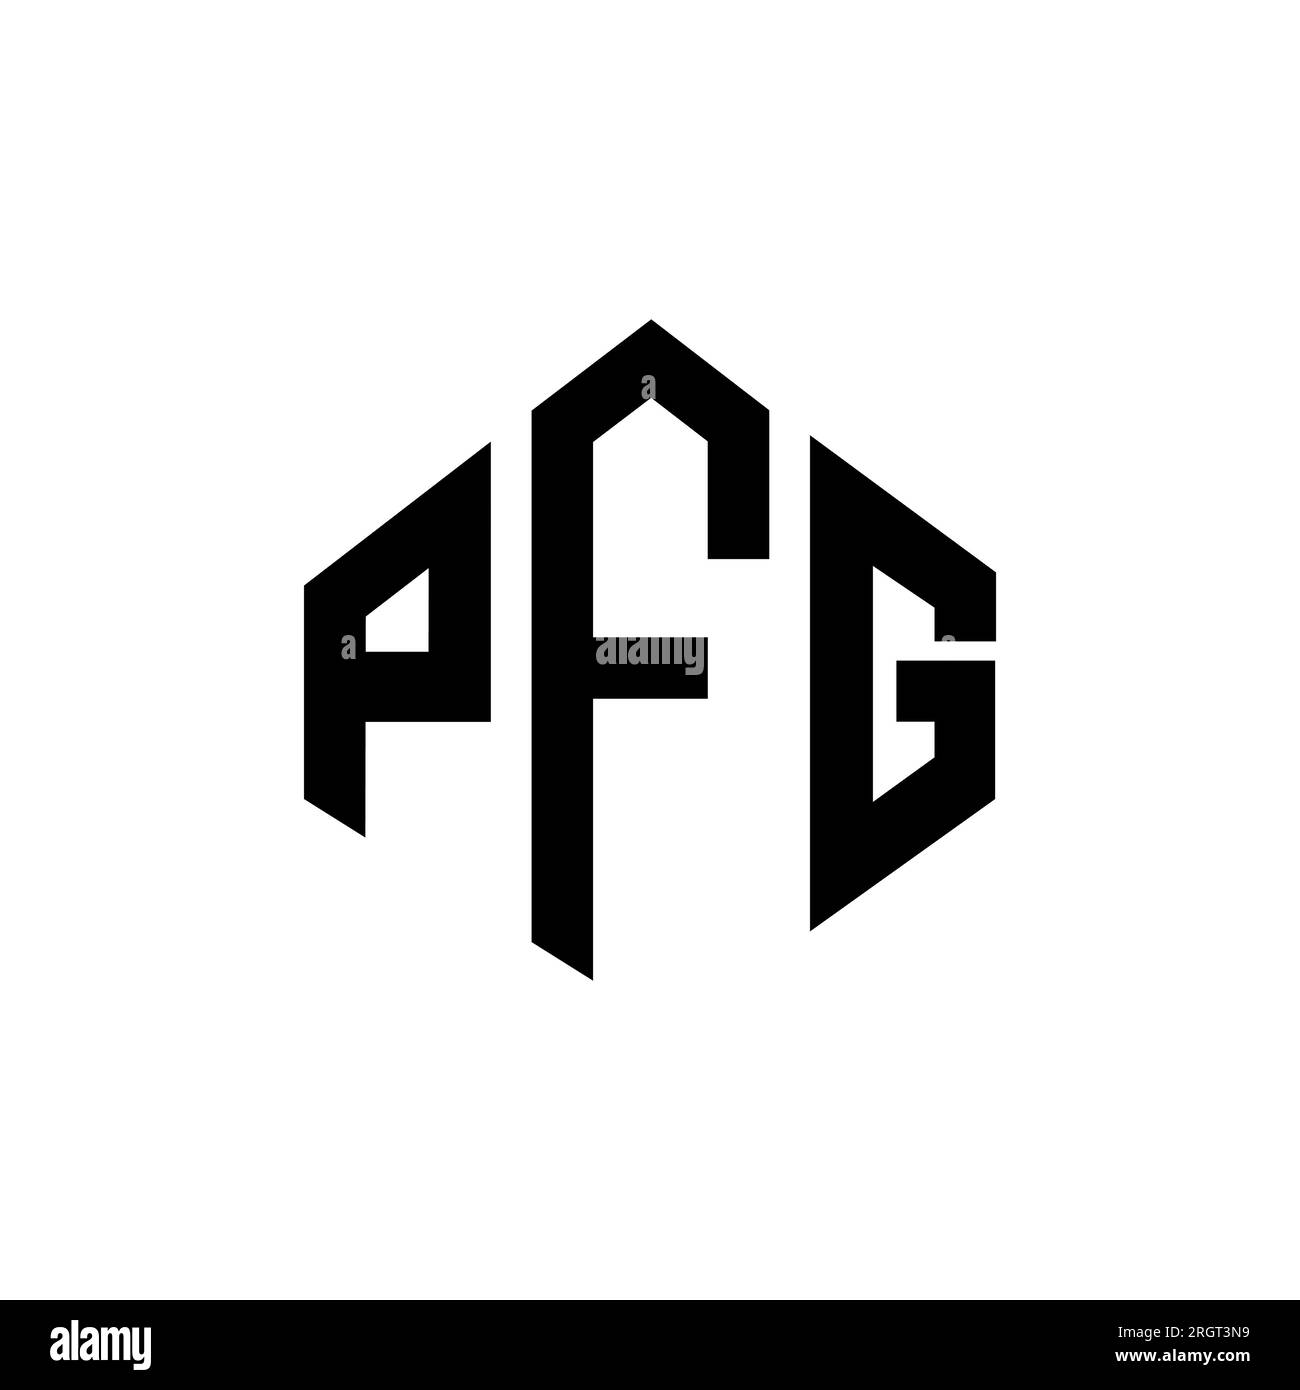 https://c8.alamy.com/comp/2RGT3N9/pfg-letter-logo-design-with-polygon-shape-pfg-polygon-and-cube-shape-logo-design-pfg-hexagon-vector-logo-template-white-and-black-colors-pfg-monogr-2RGT3N9.jpg